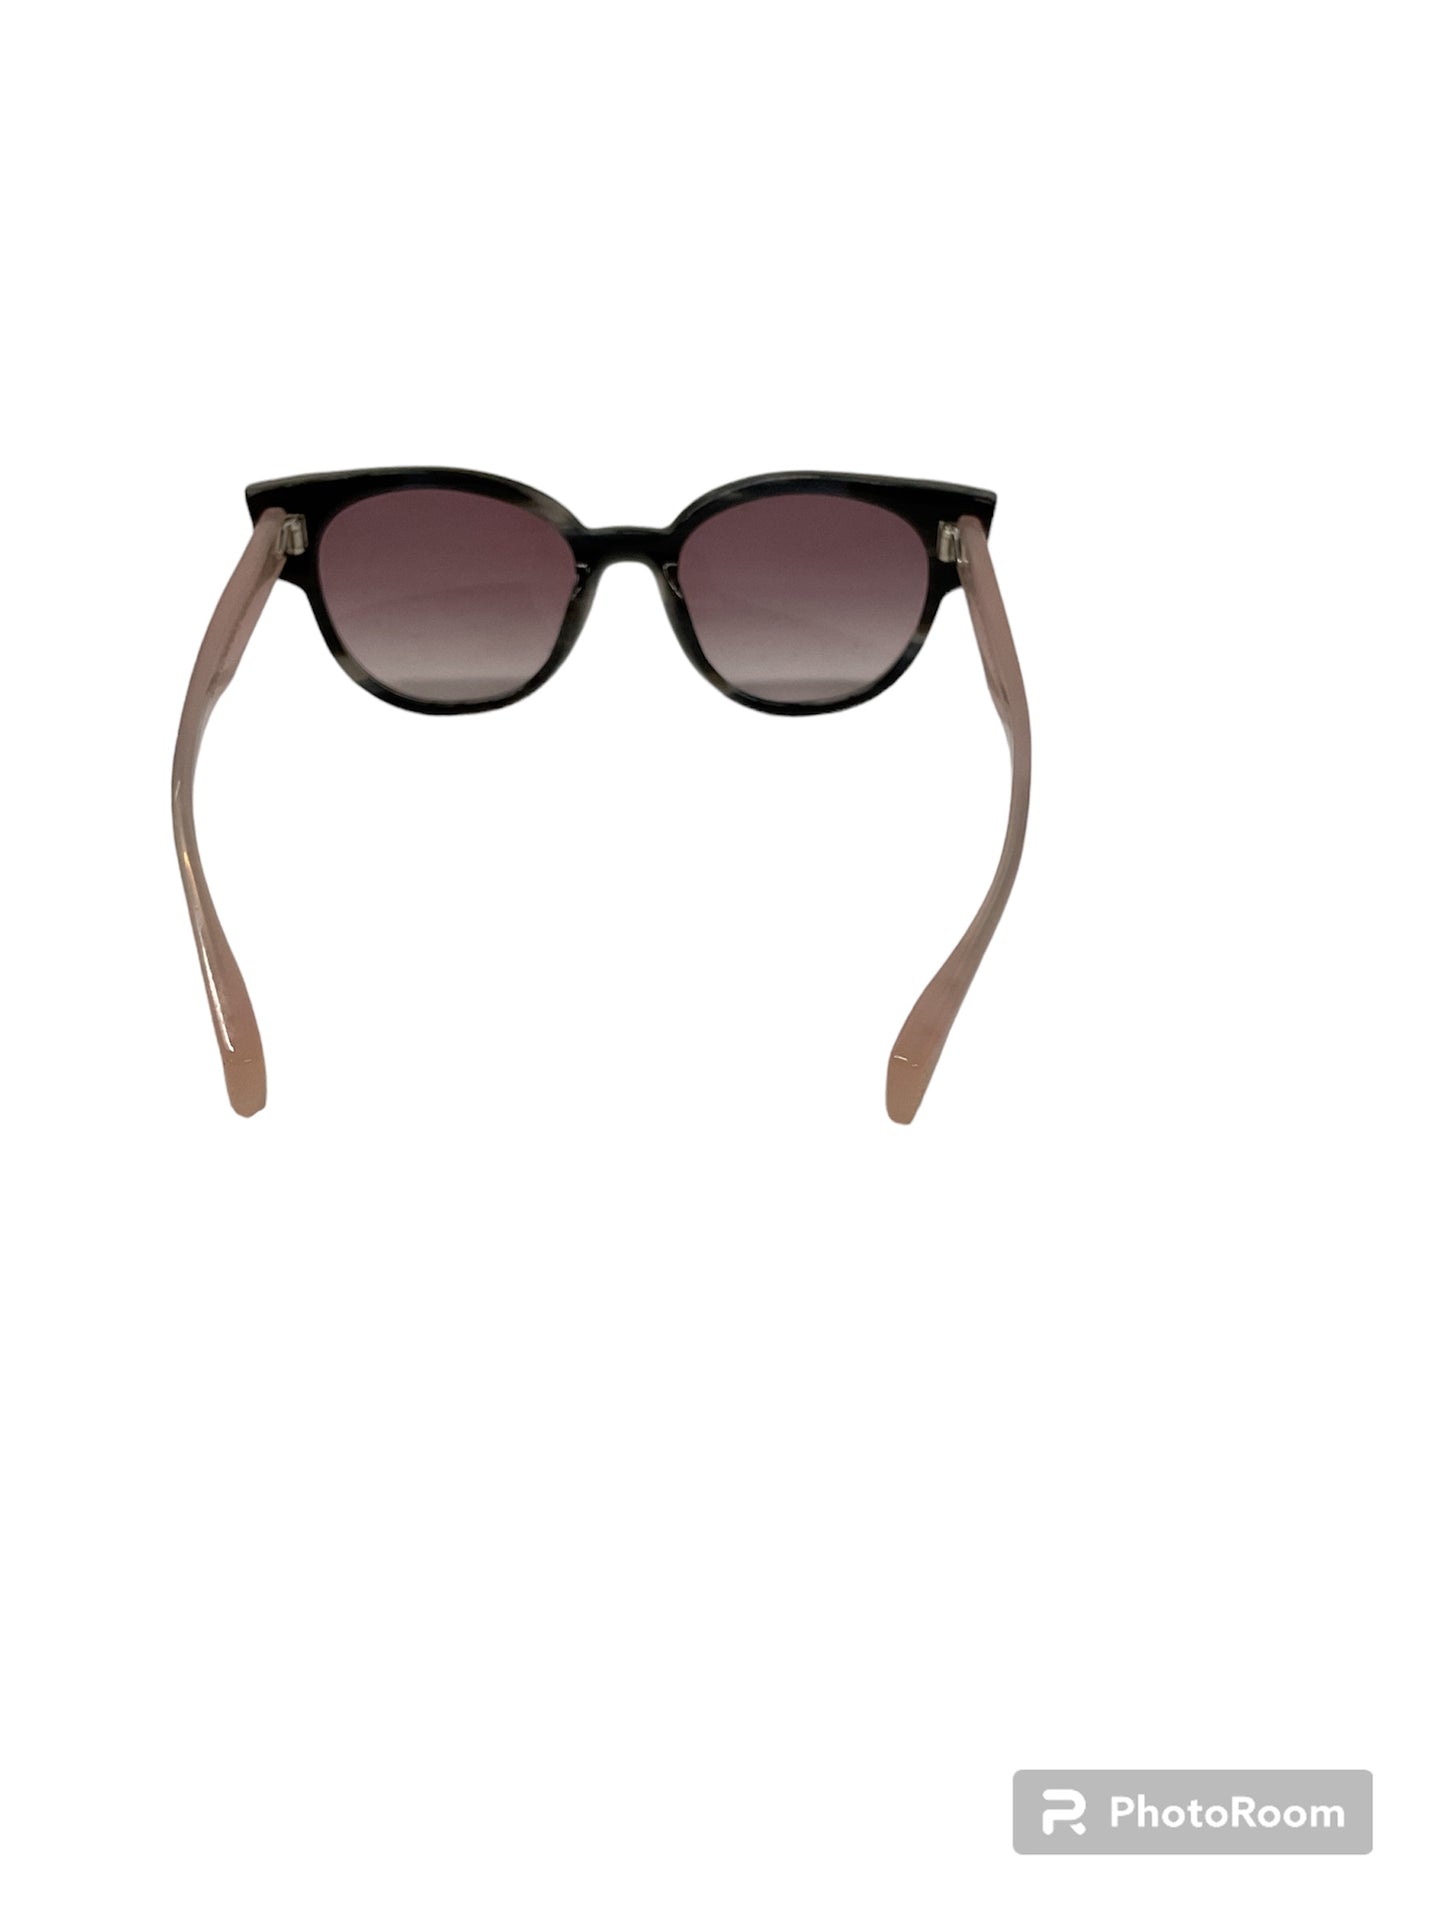 Sunglasses Designer By STATE